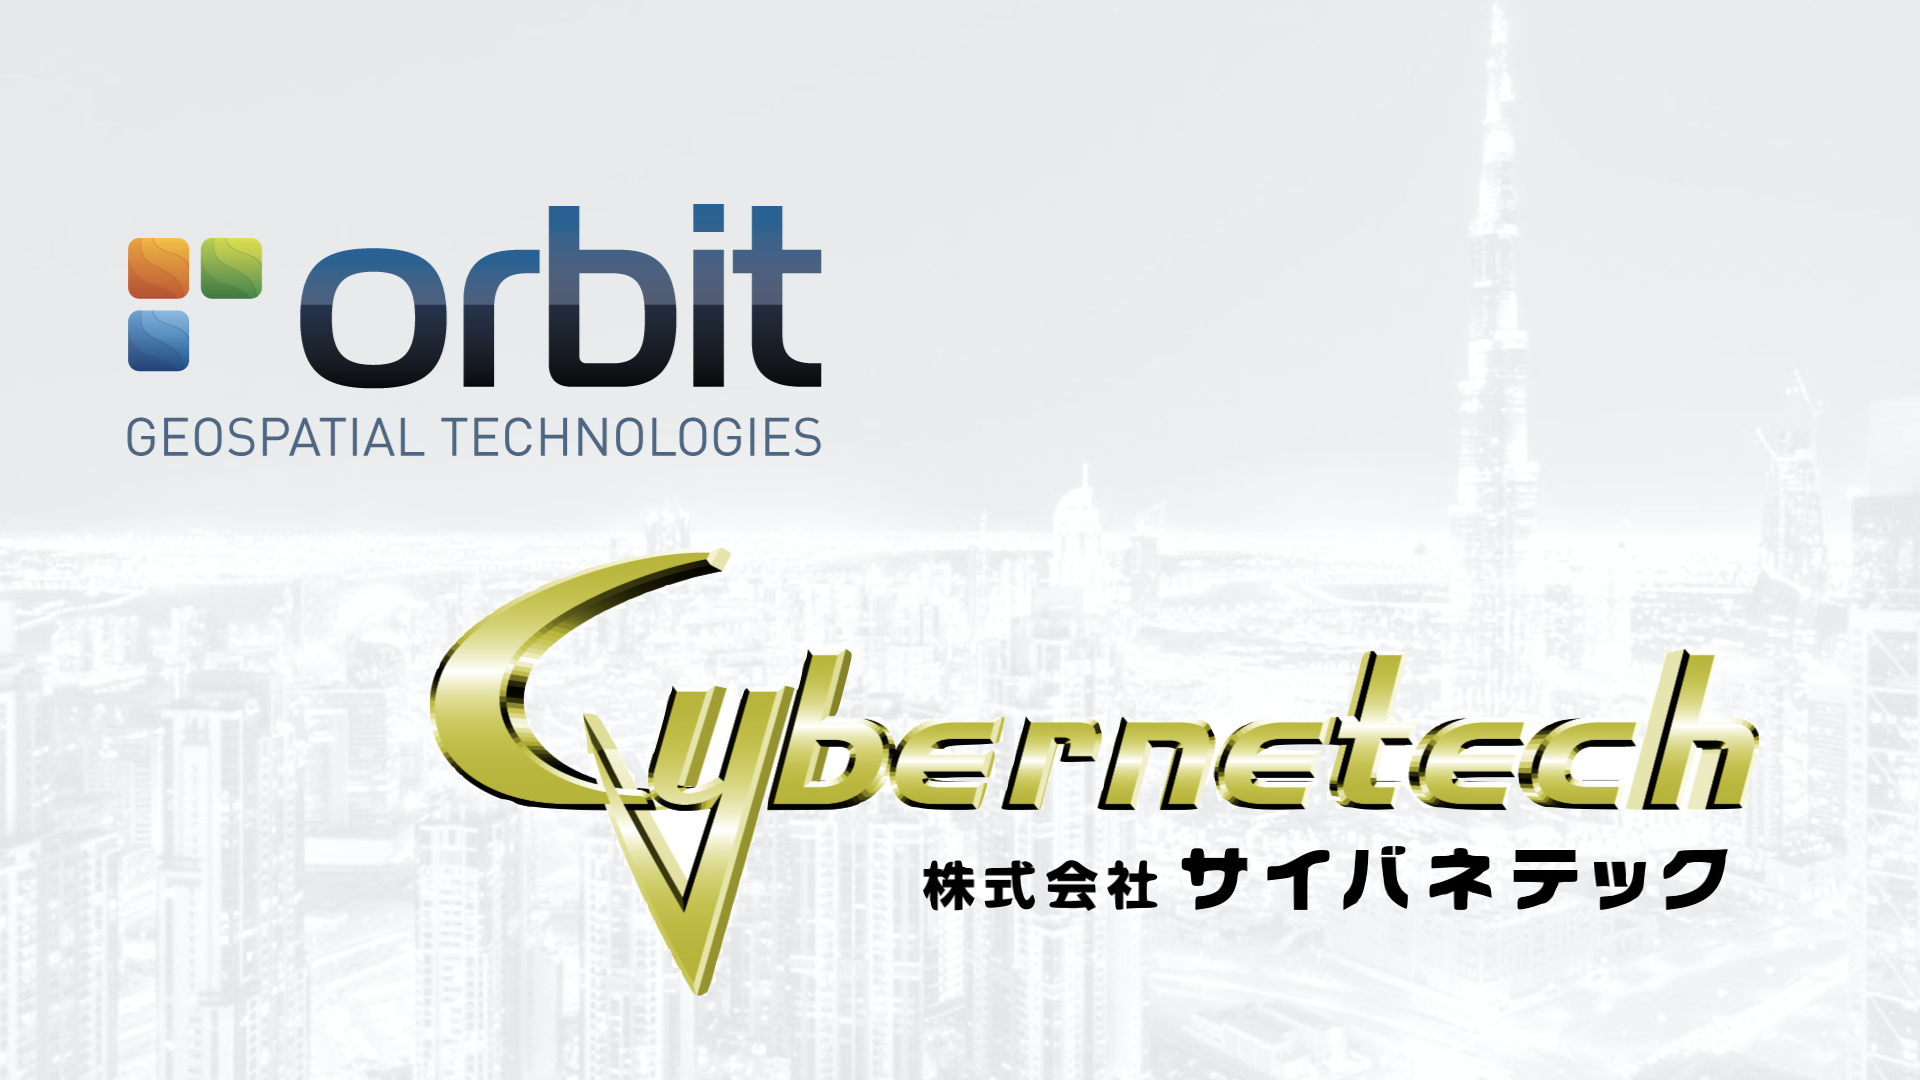 Orbit GT Orbit GT and Cybernetech, Japan, sign Reseller Agreement